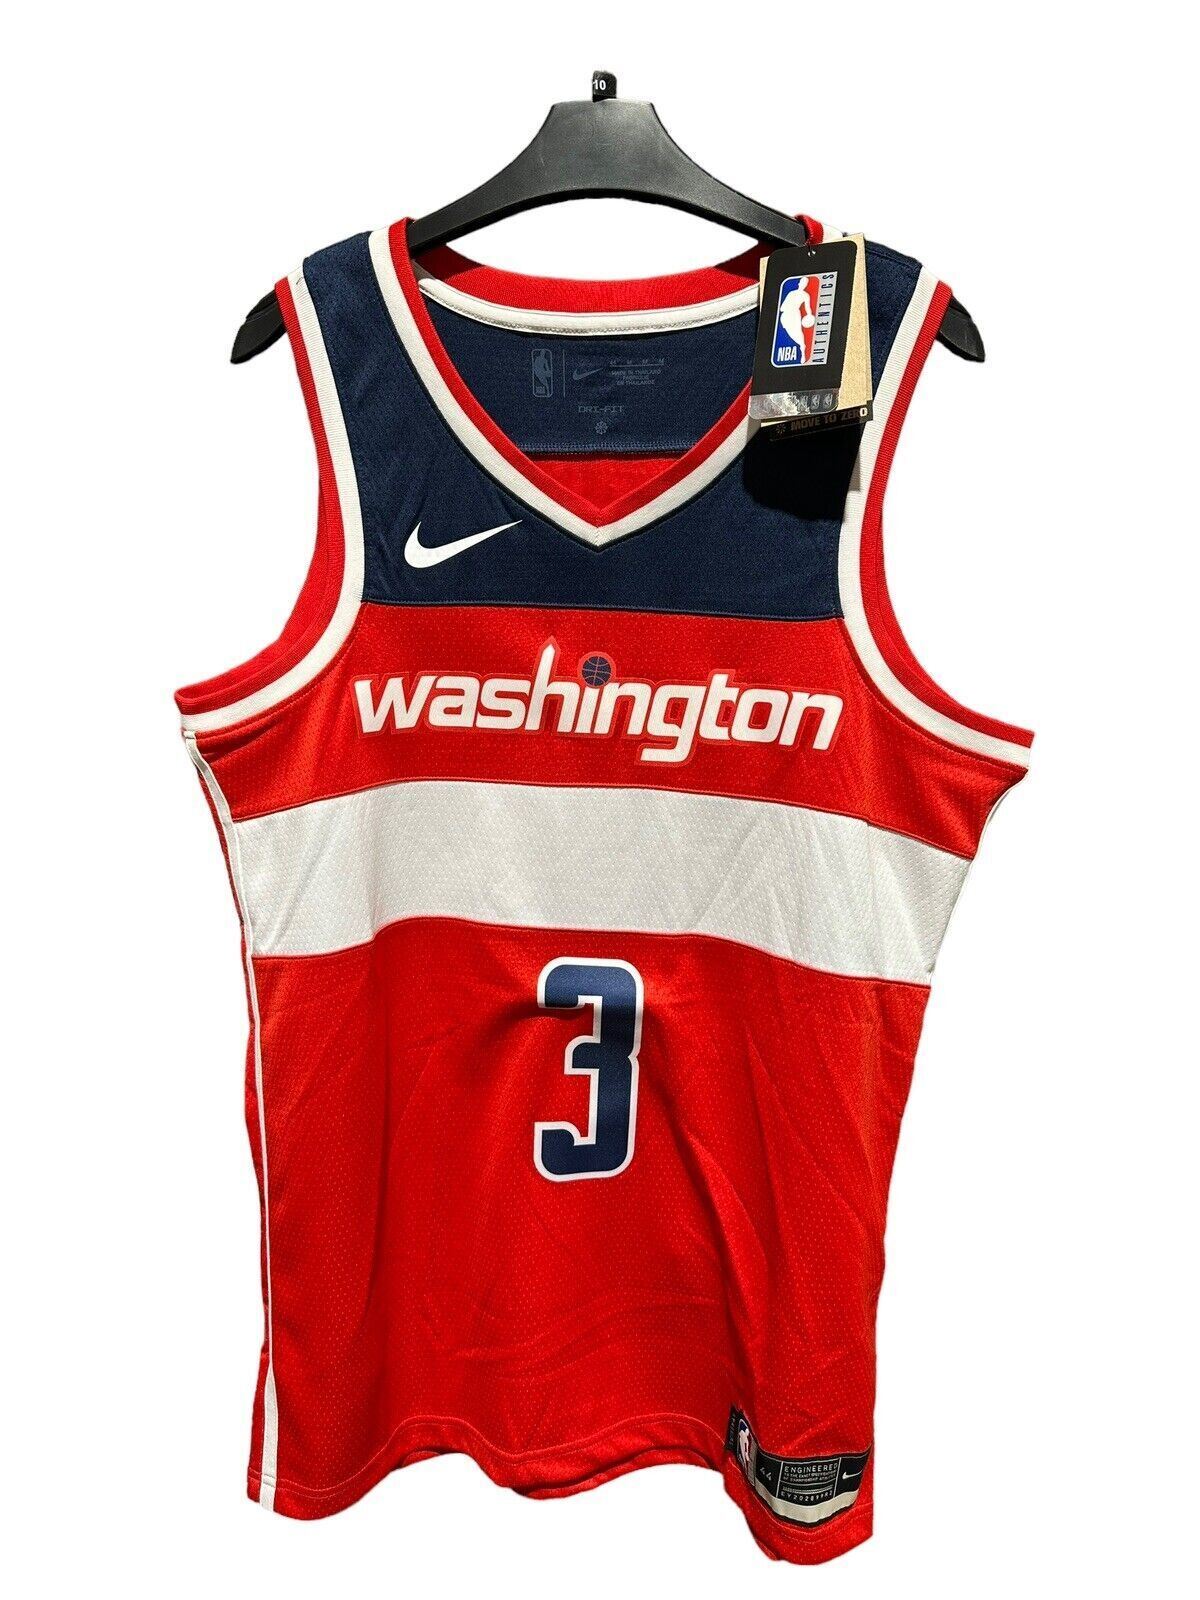 Nike NBA Washington Wizards Swingman Jersey BEAL 3 Basketball Mens Medium.